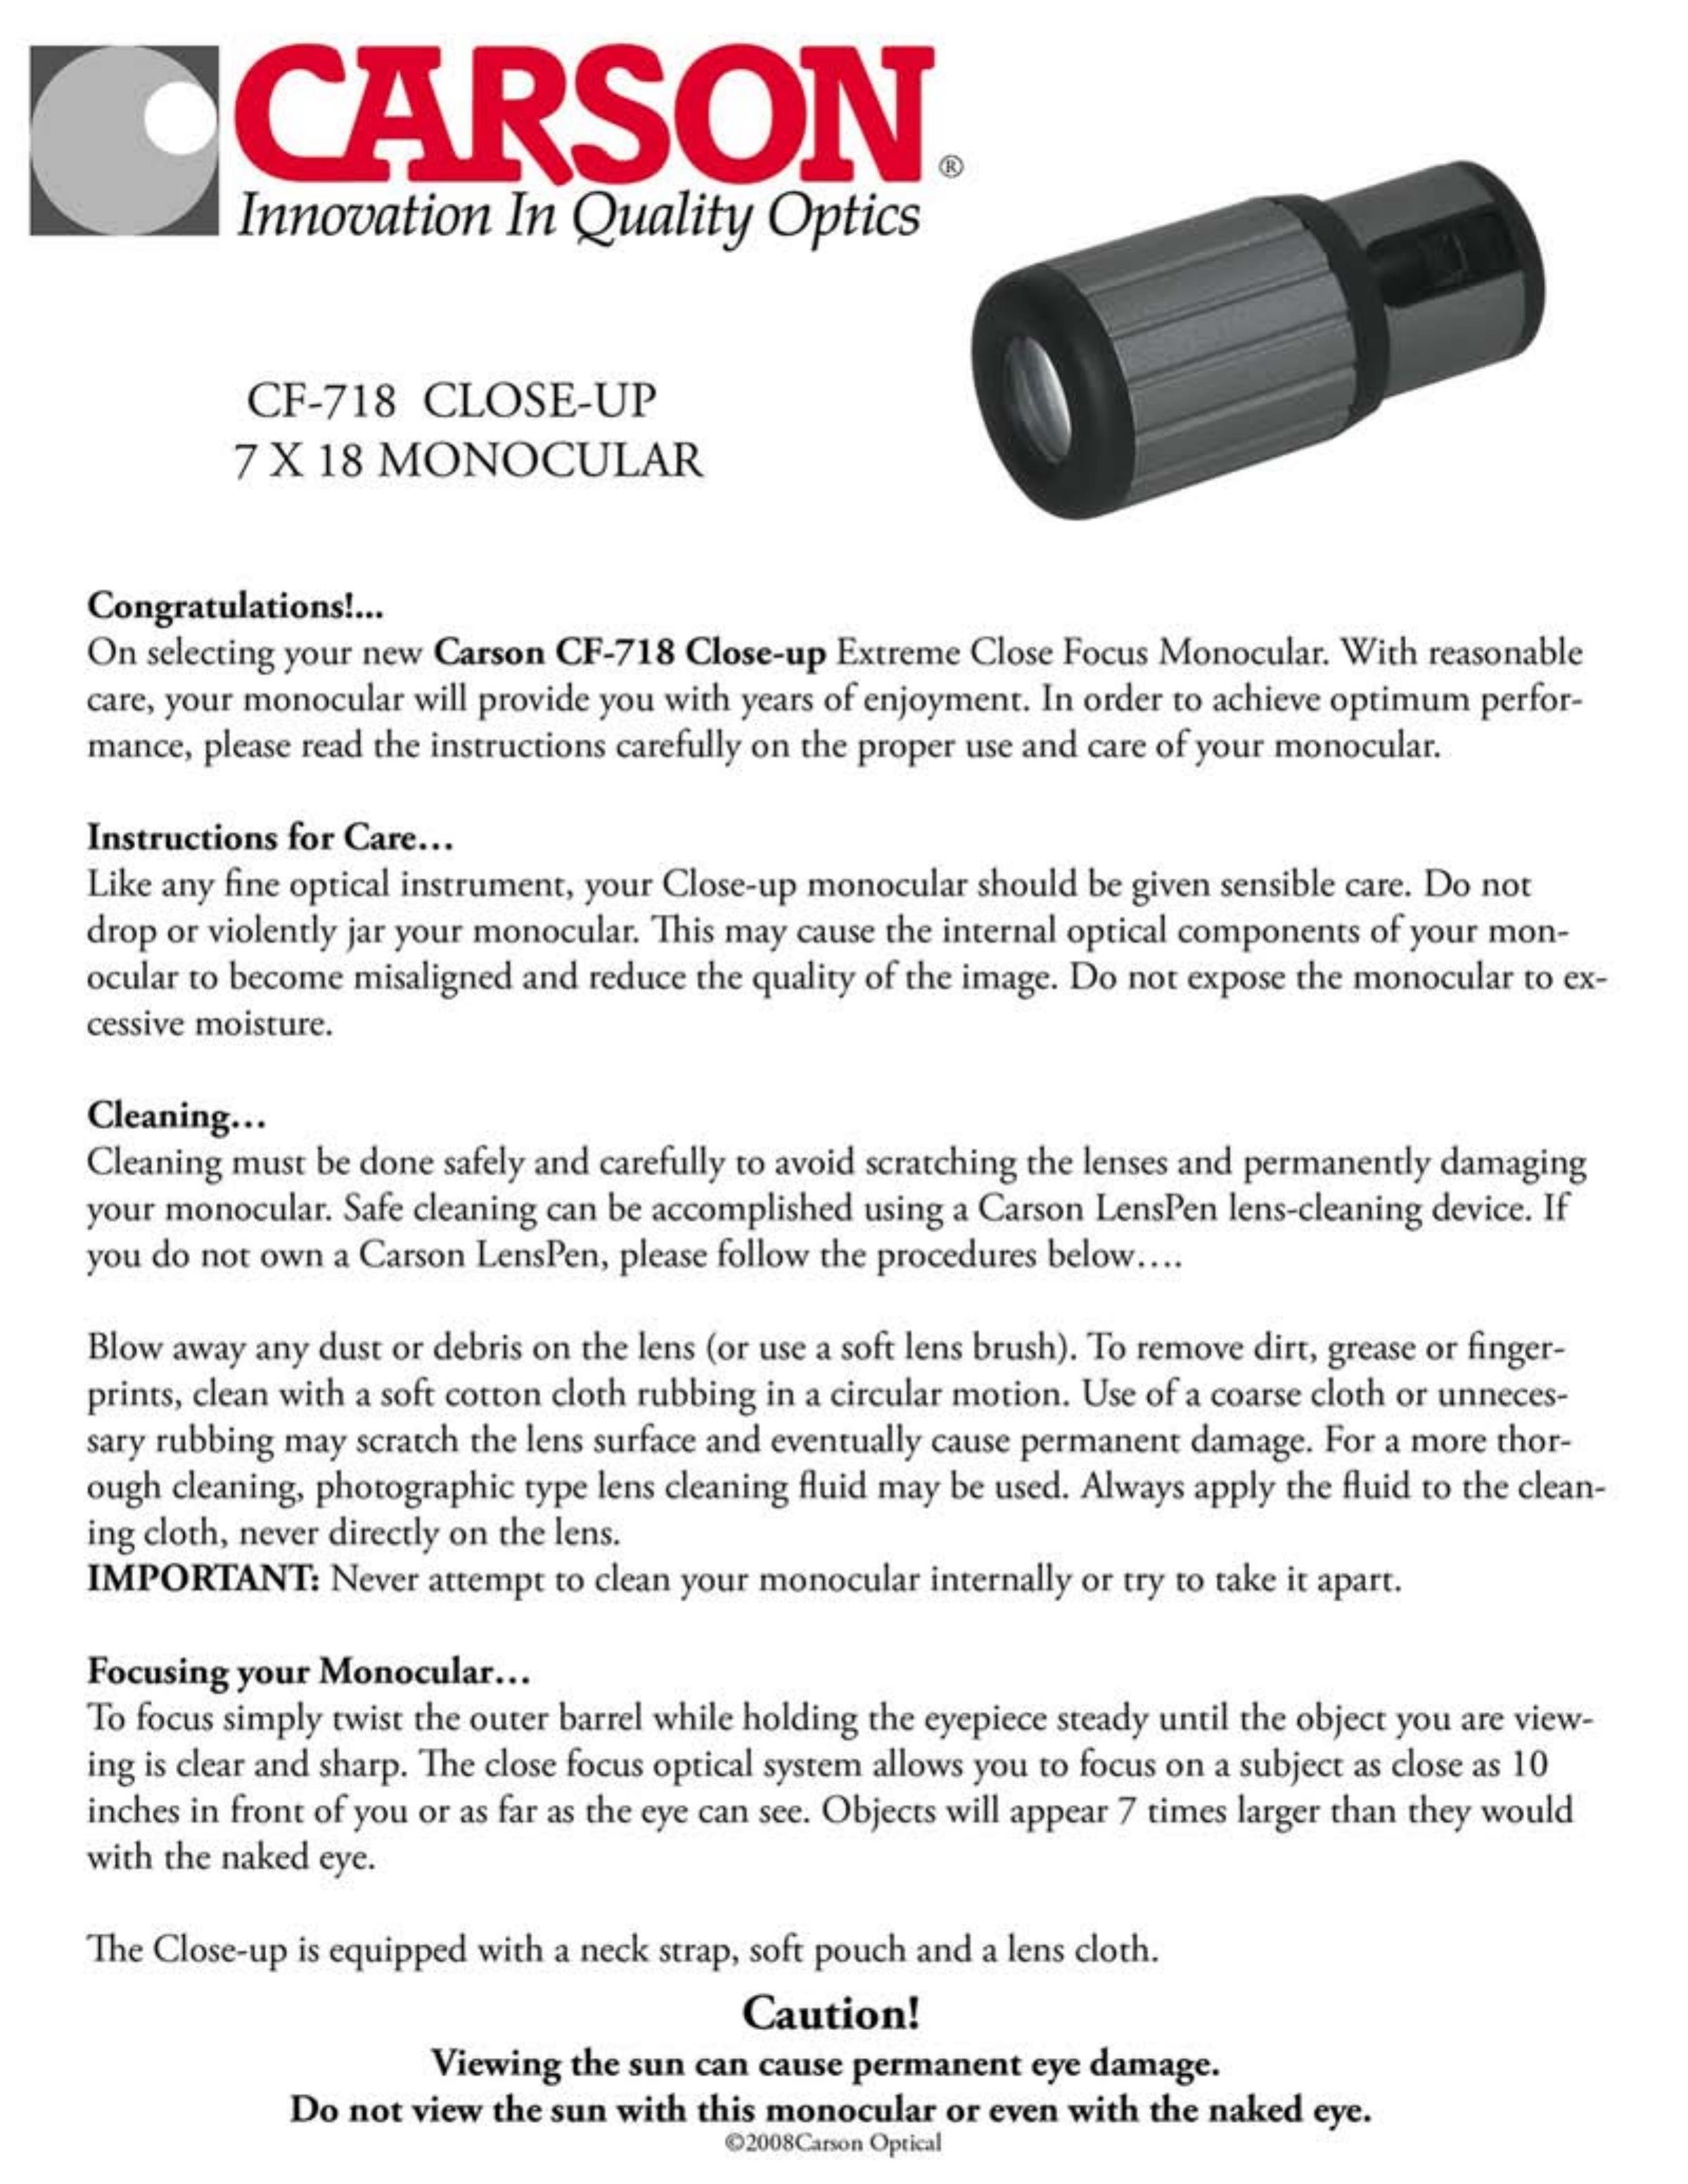 Carson Optical CF-718 Camera Lens User Manual